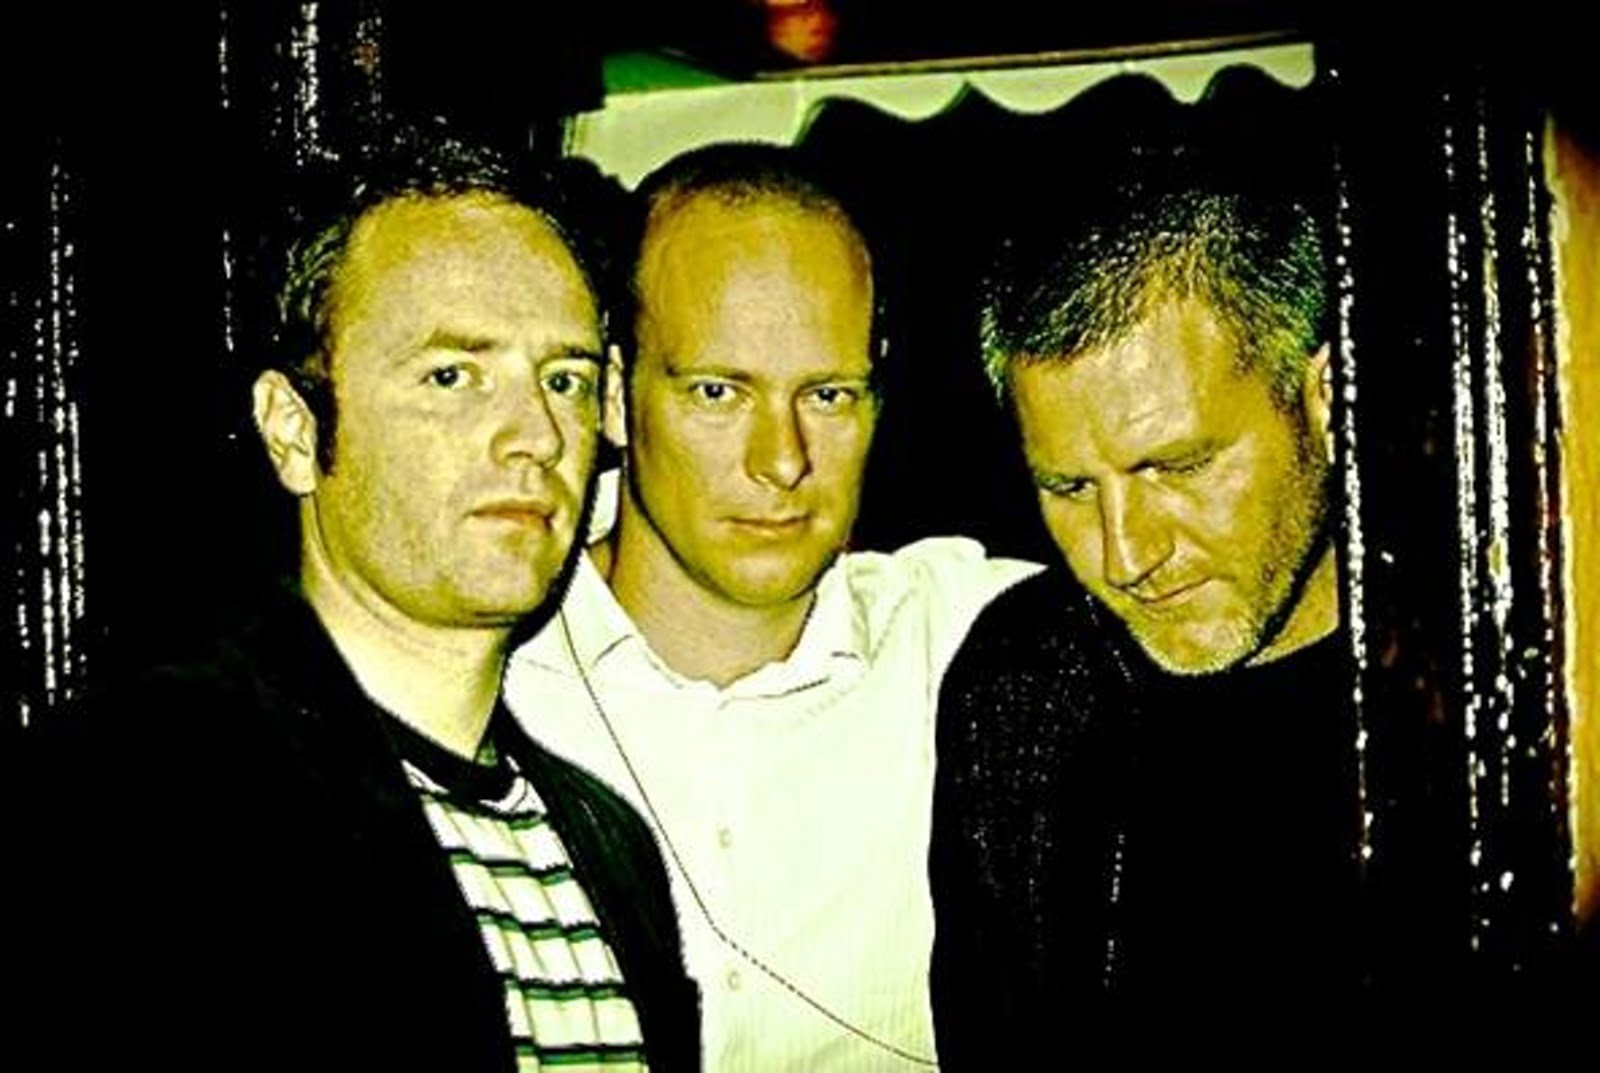 Svein Olav Herstad trio